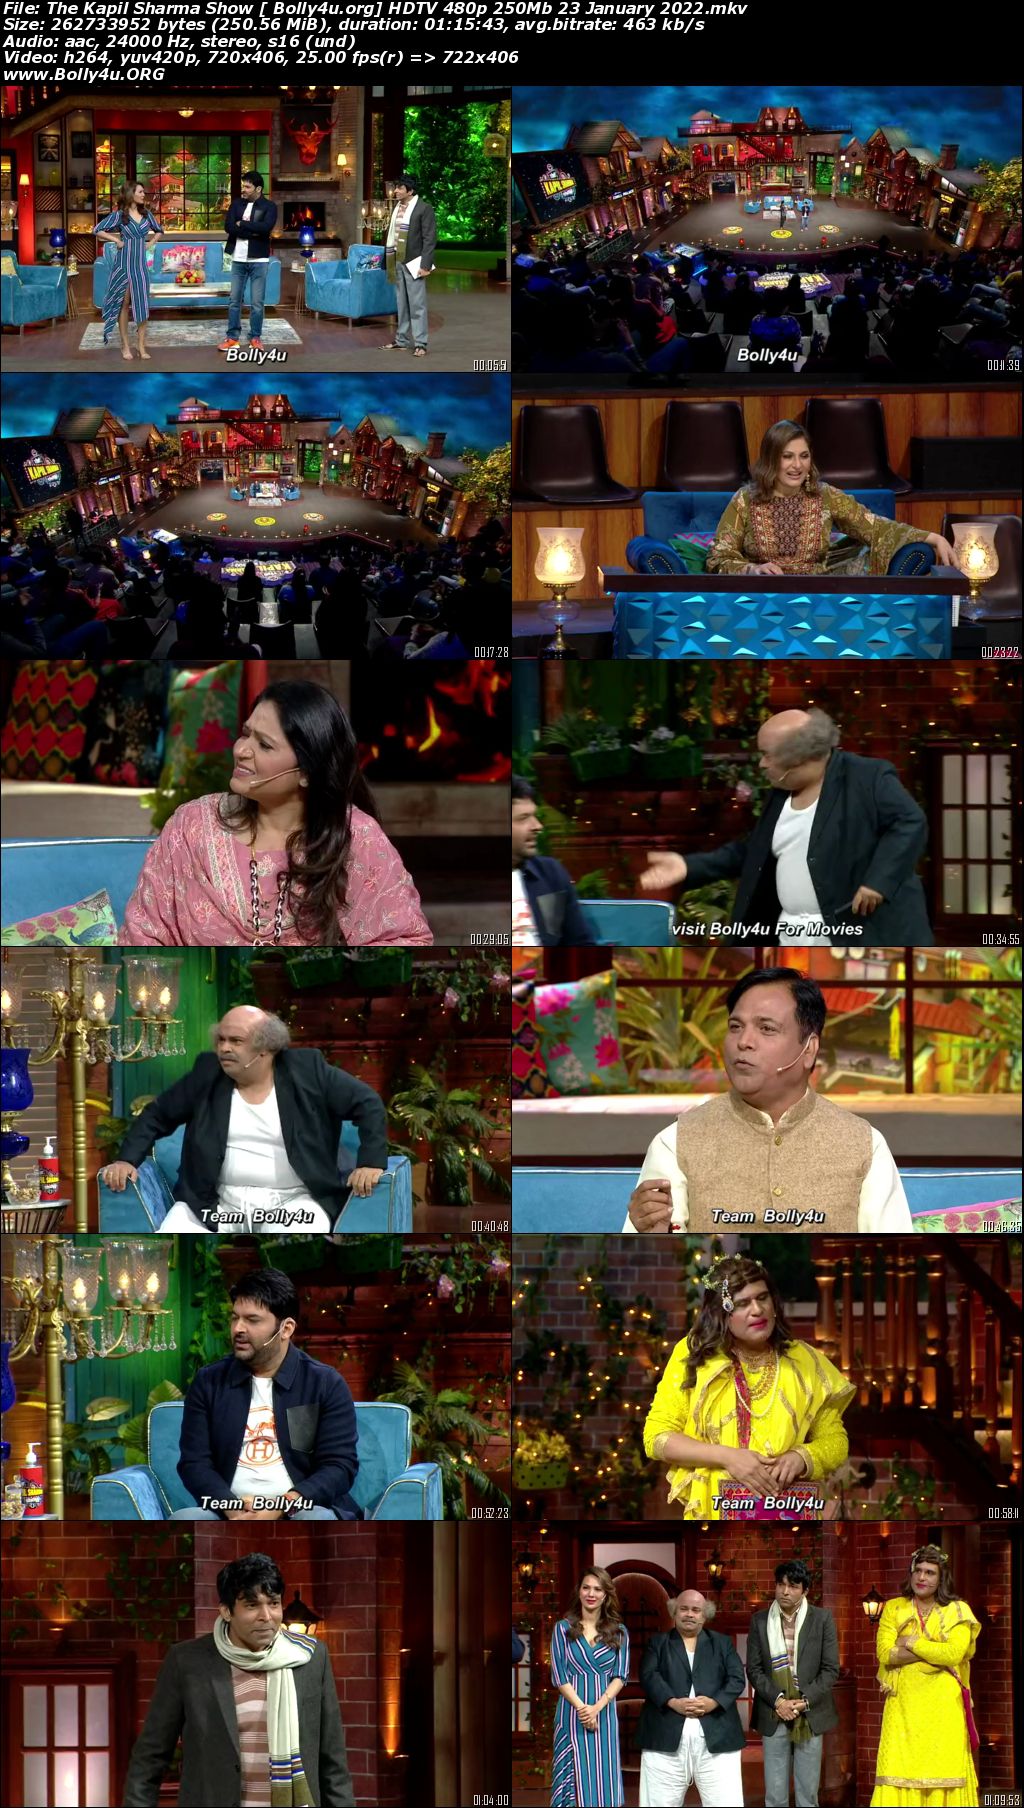 The Kapil Sharma Show HDTV 480p 250Mb 23 January 2022 Download